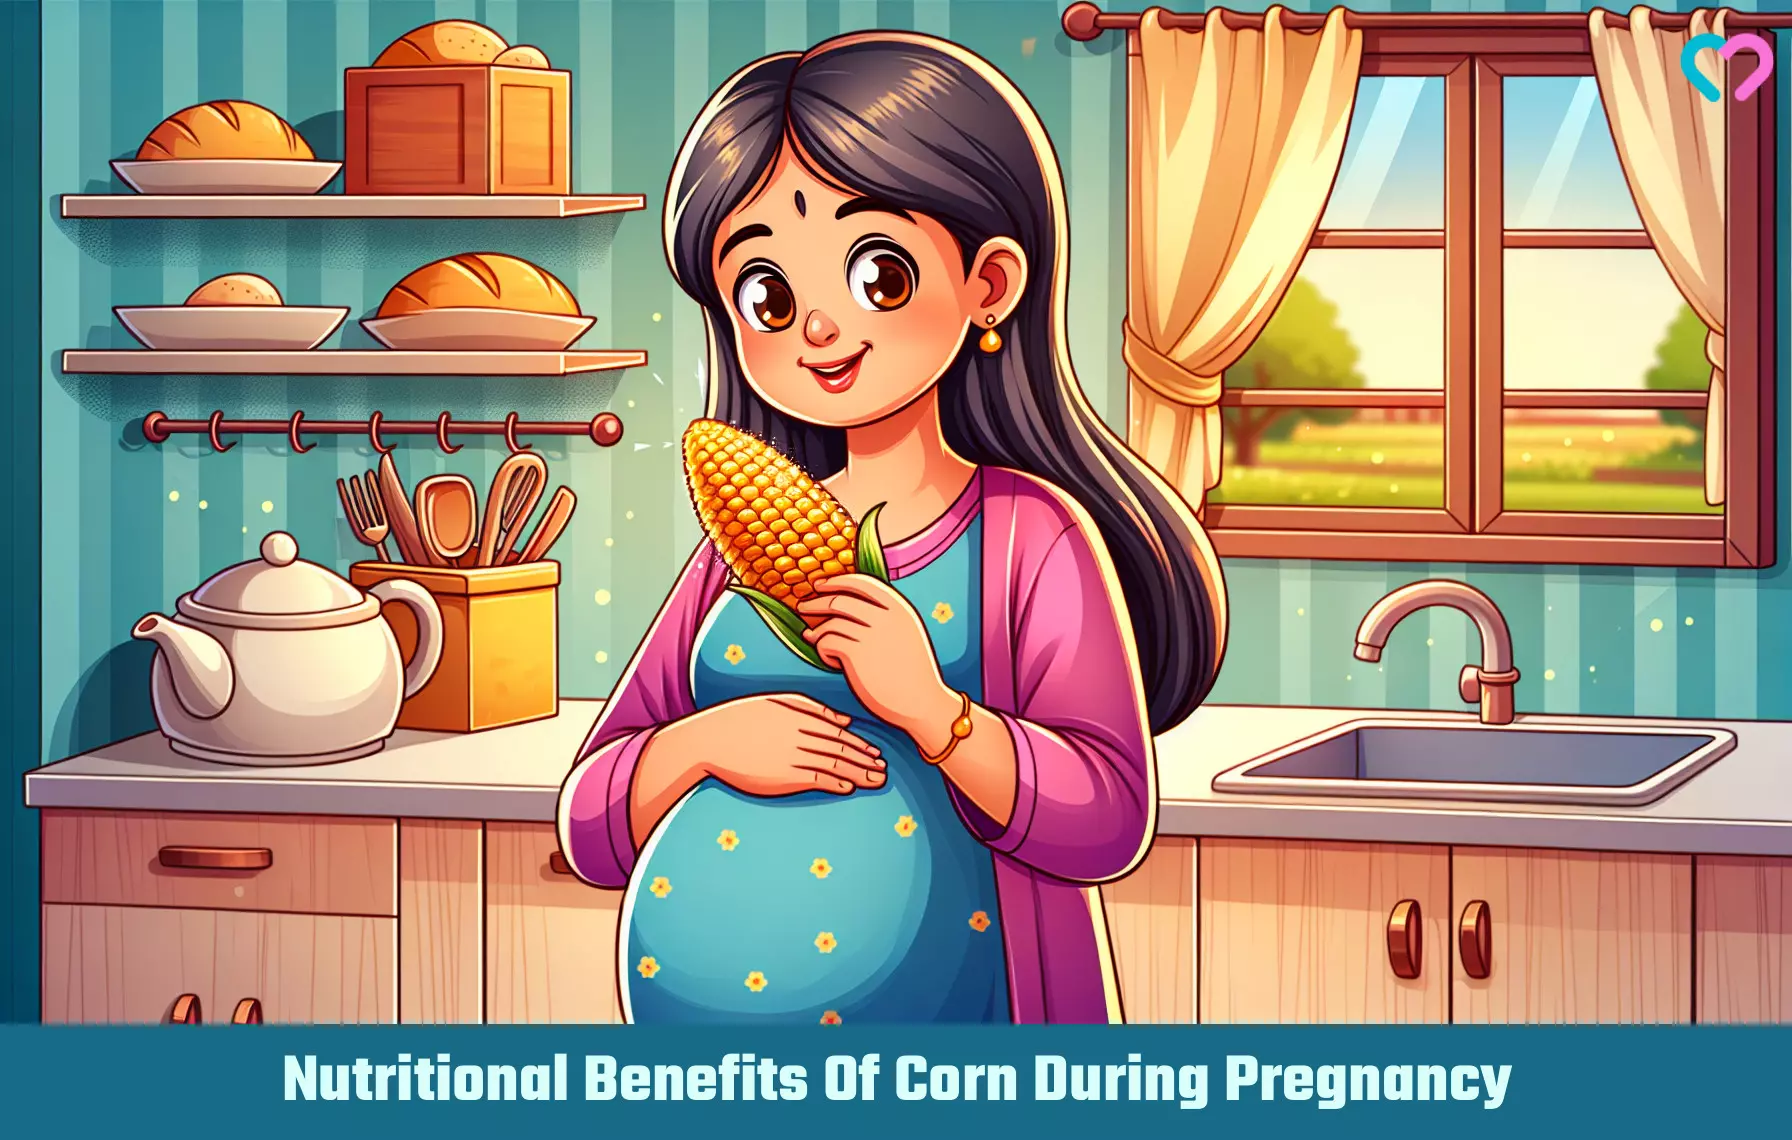 corn during pregnancy_illustration